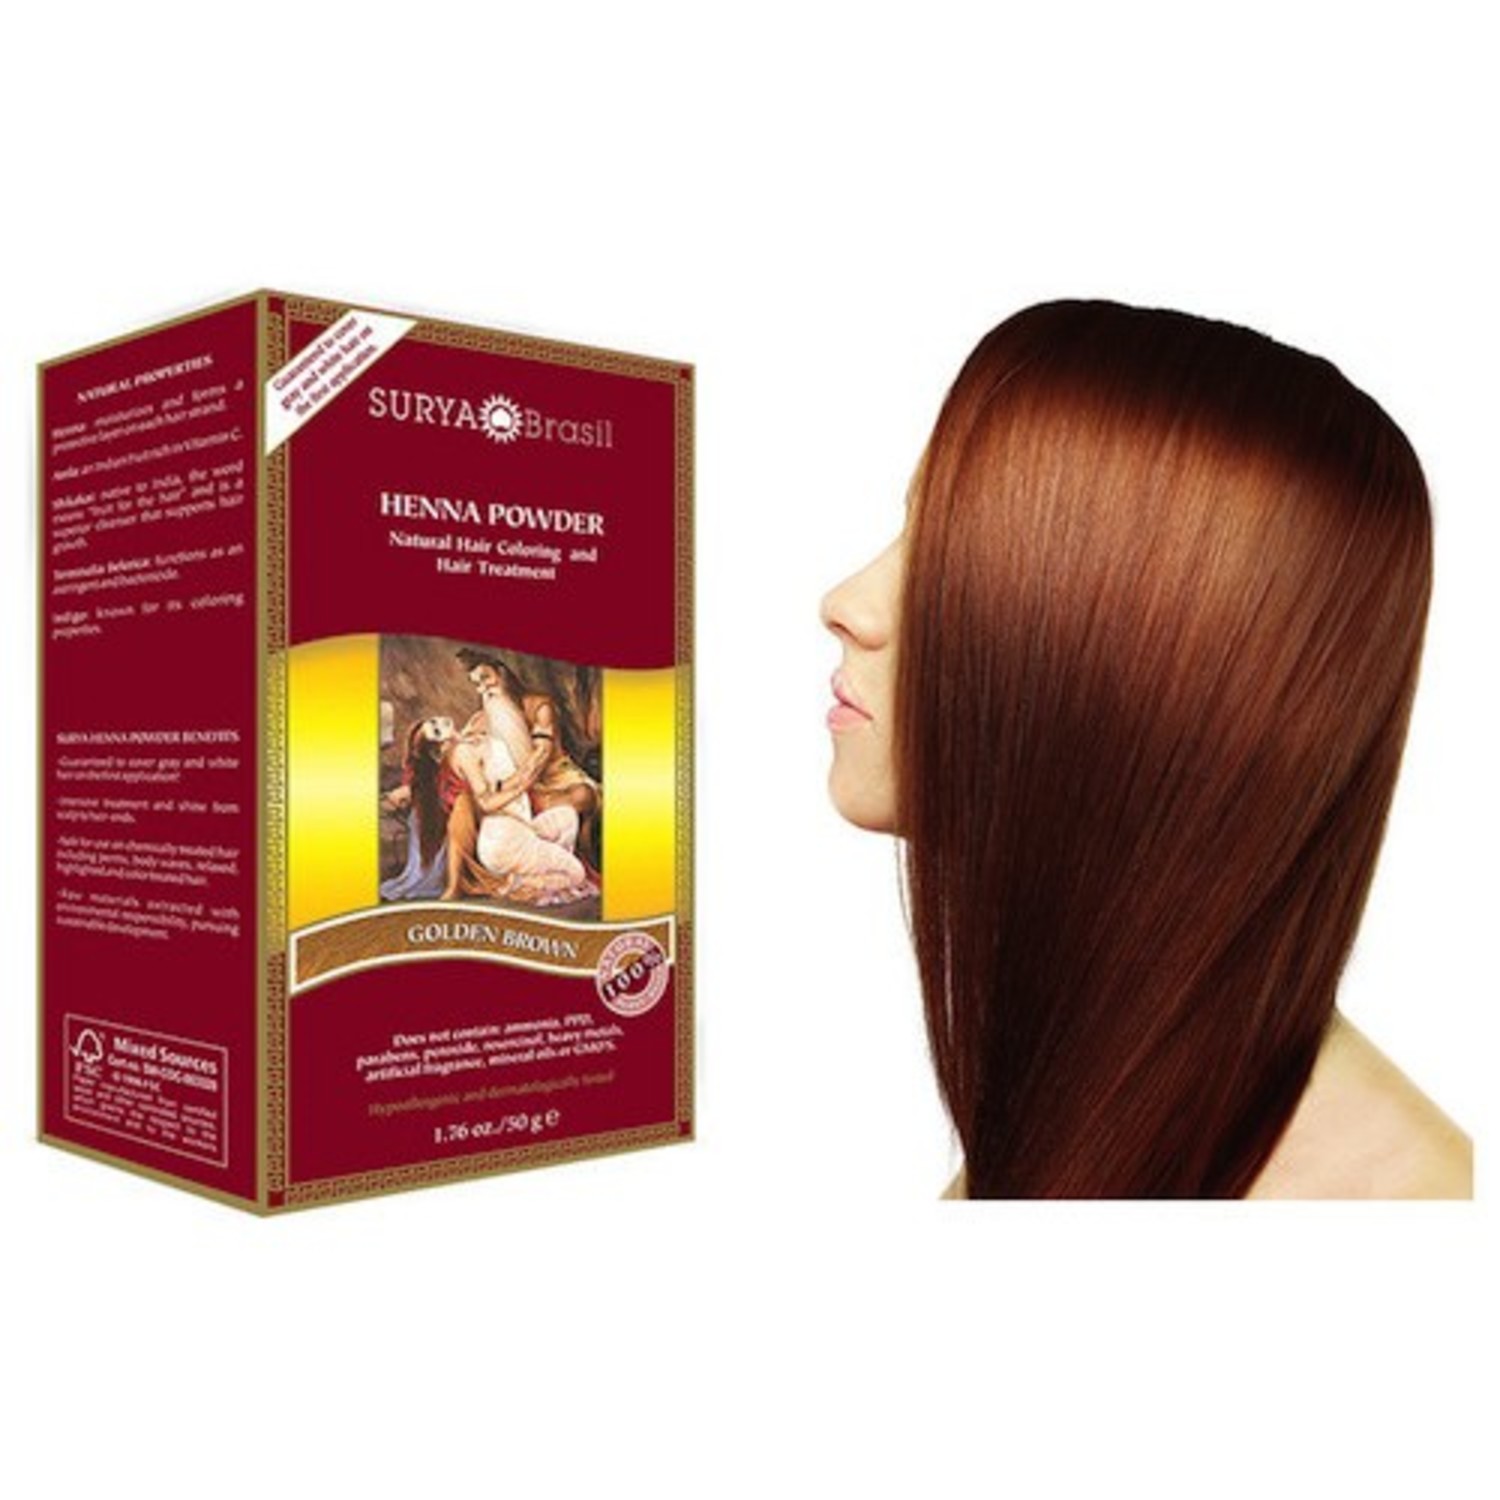 Surya Brasil Henna Powder Golden Brown | natural hair colour - De Groene  Drogist